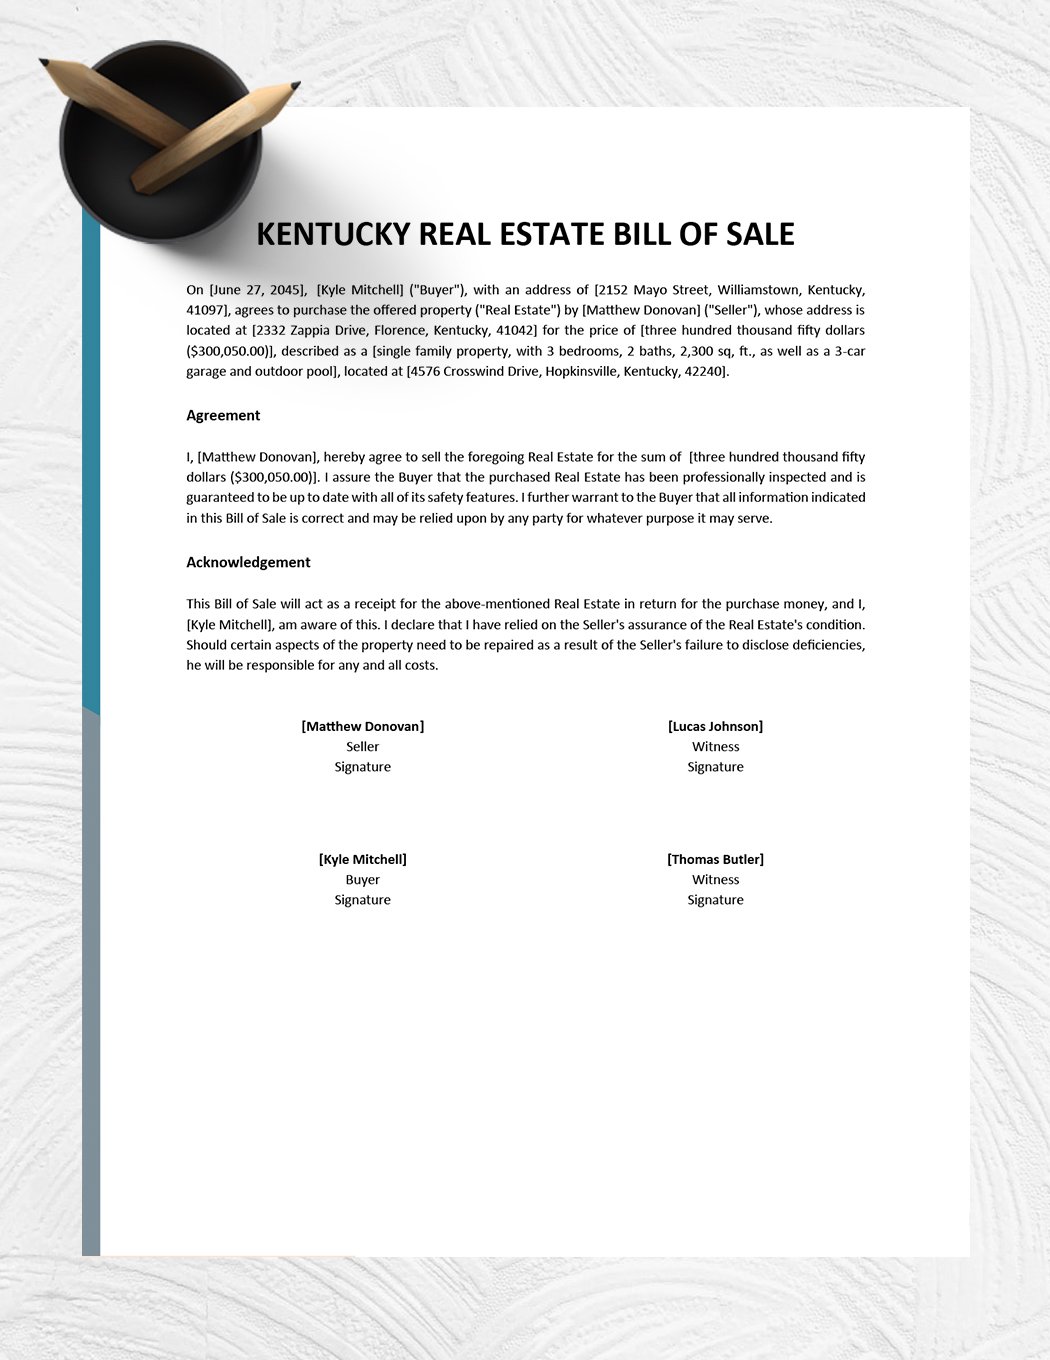 Kentucky Real Estate Bill of Sale Template